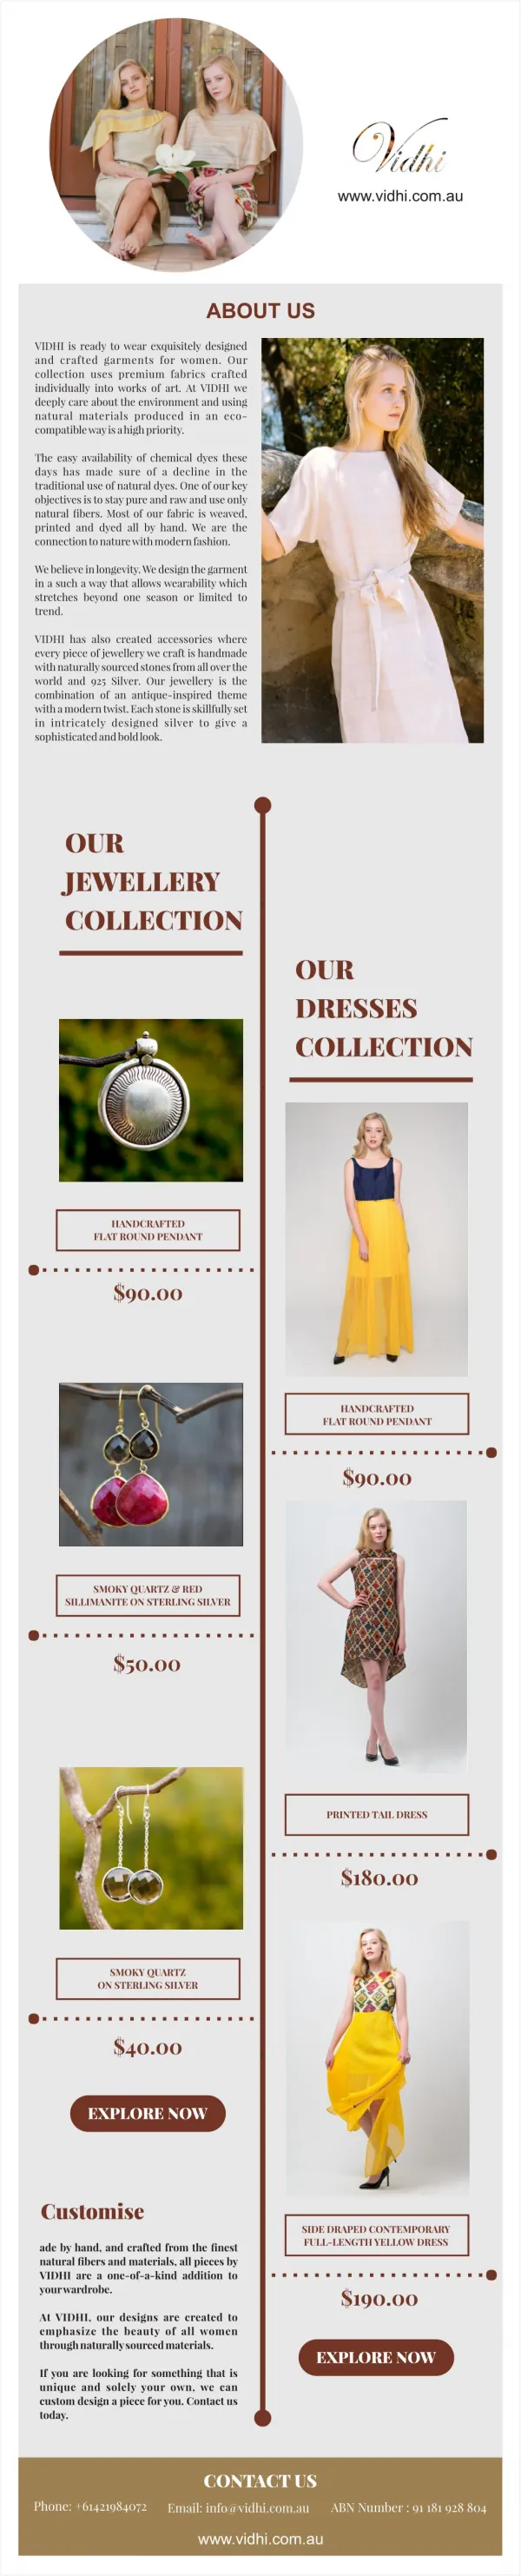 Shop Online Women’s Dresses and Accessories